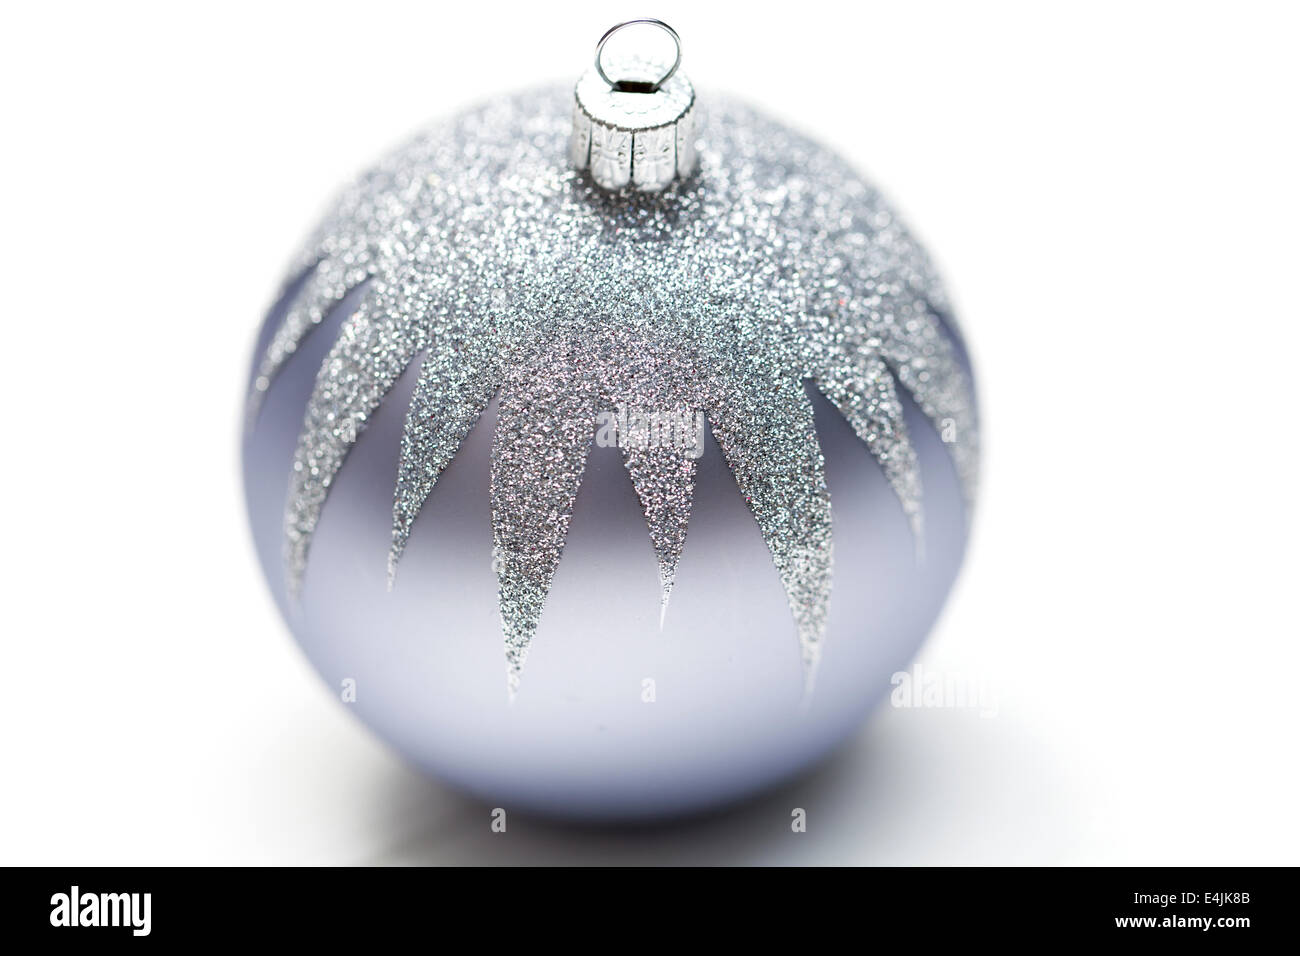 Glittery Christmas ornament ball on white background Stock Photo - Alamy